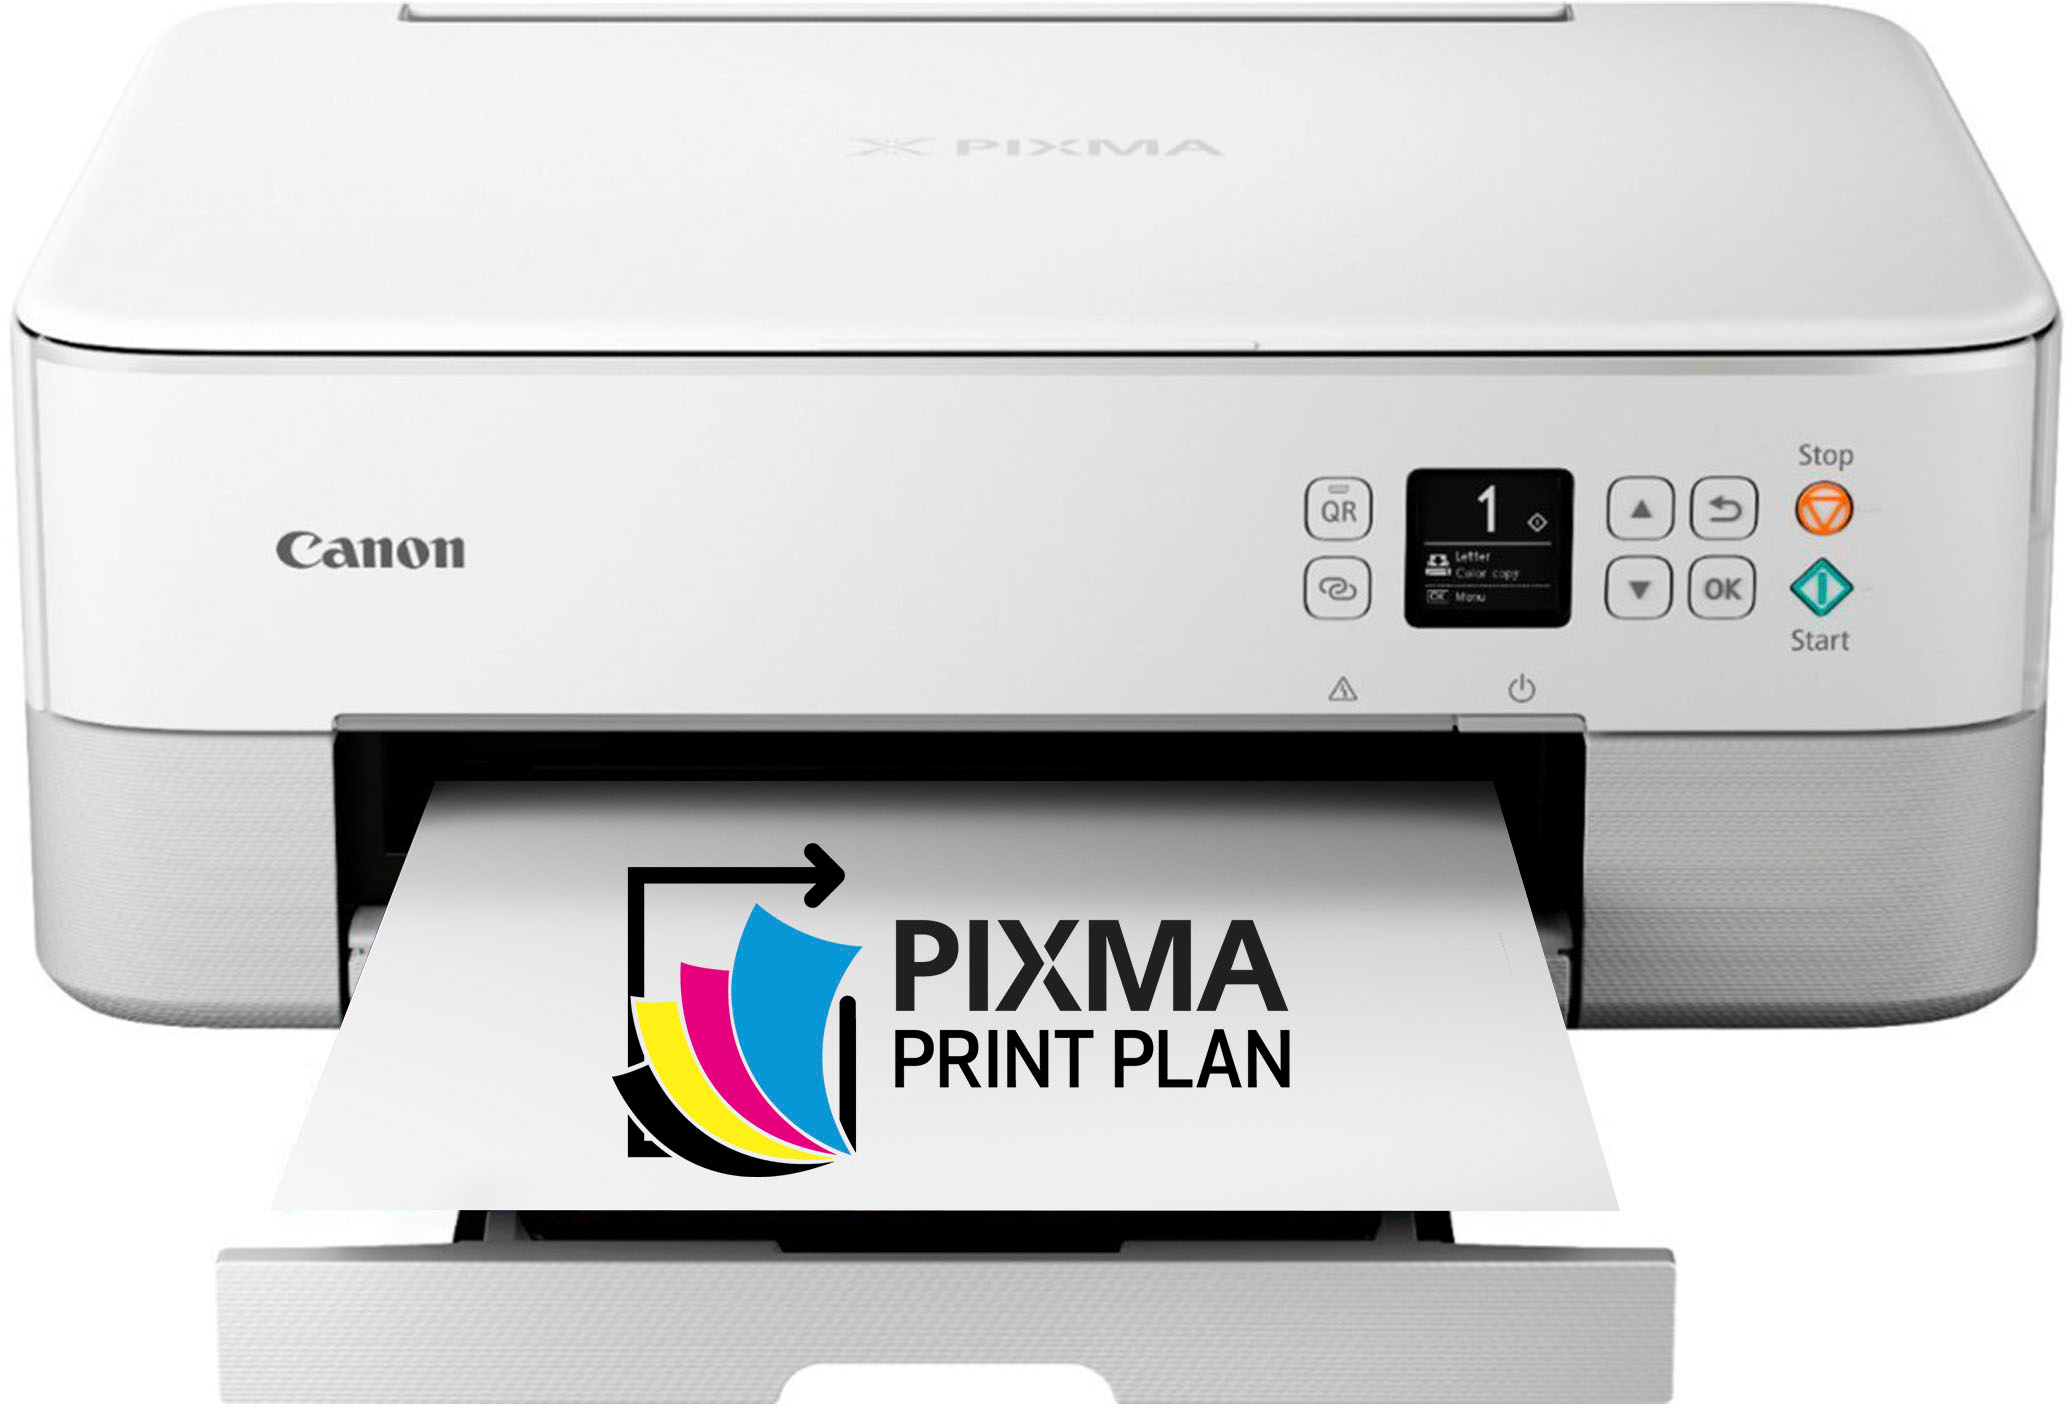 Portable Photo Printers - Canon Ireland